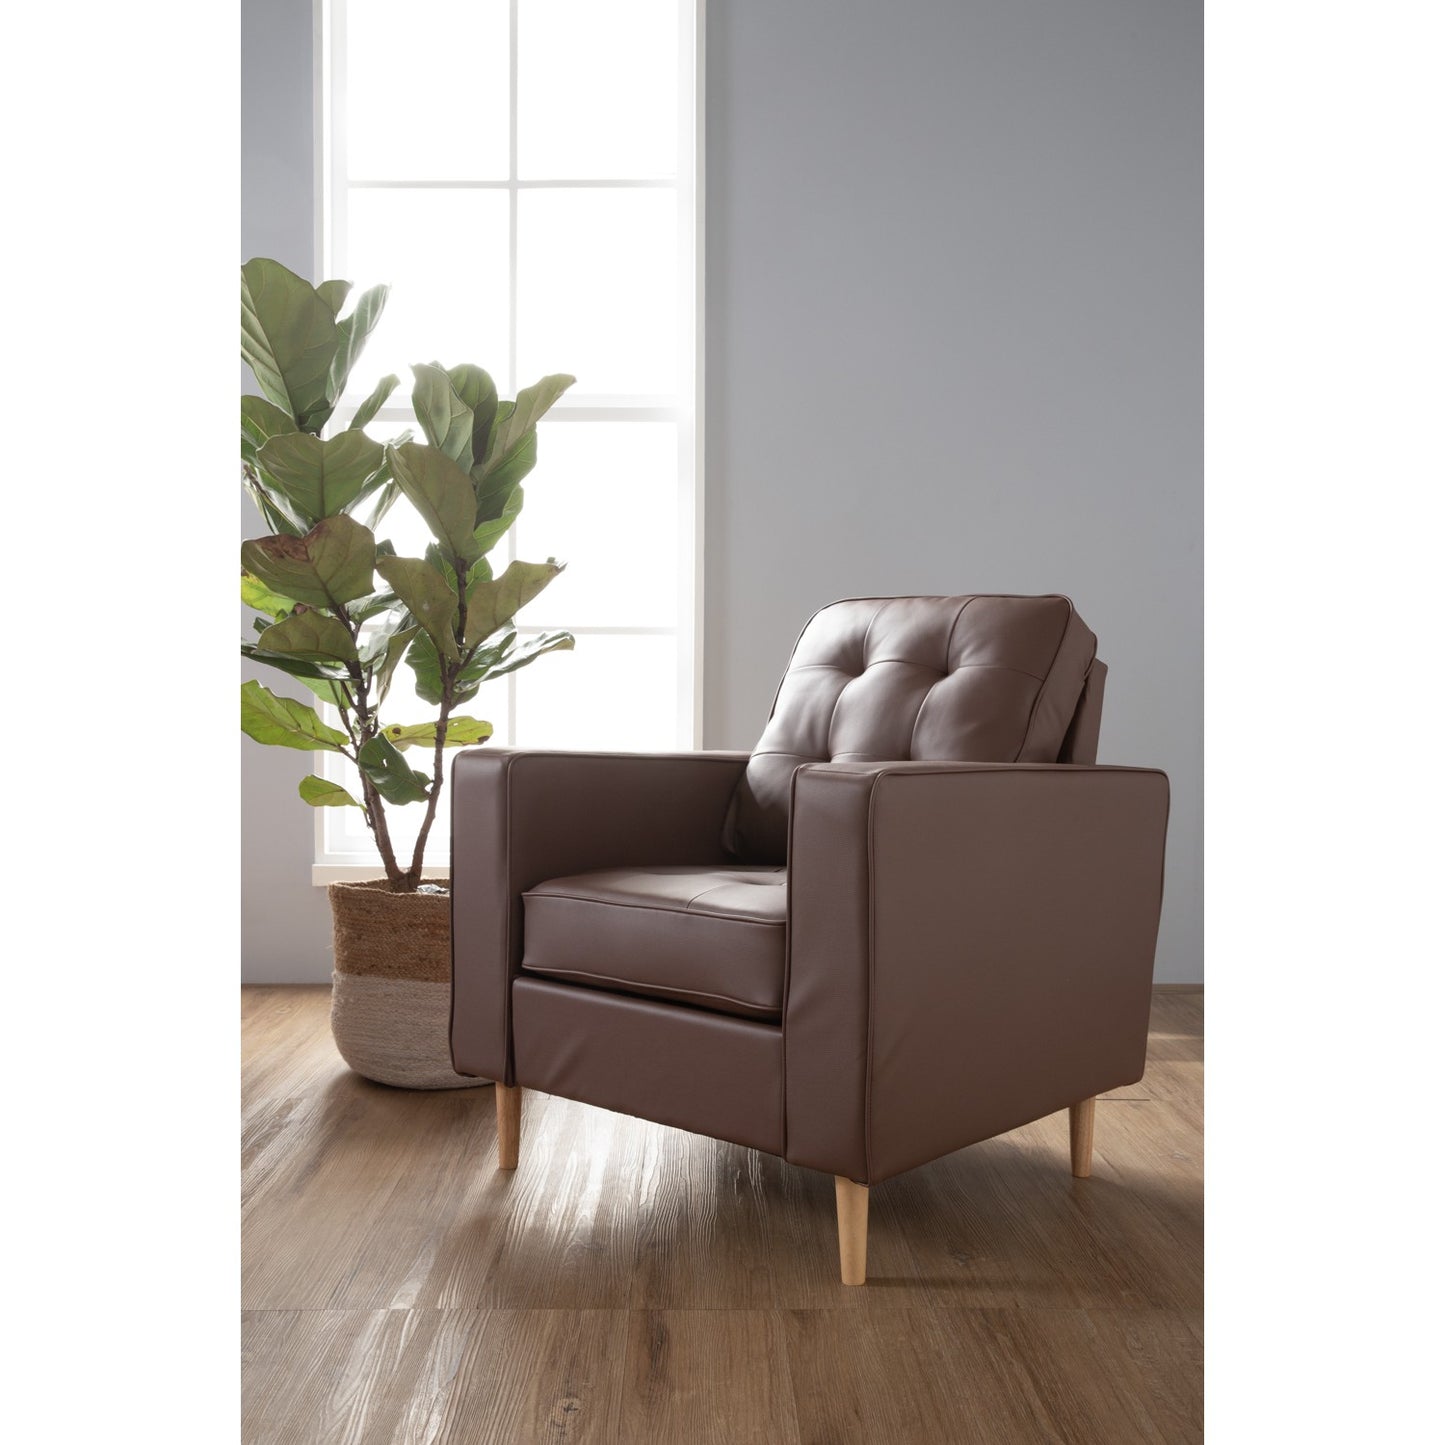 Rokka single seat sofa